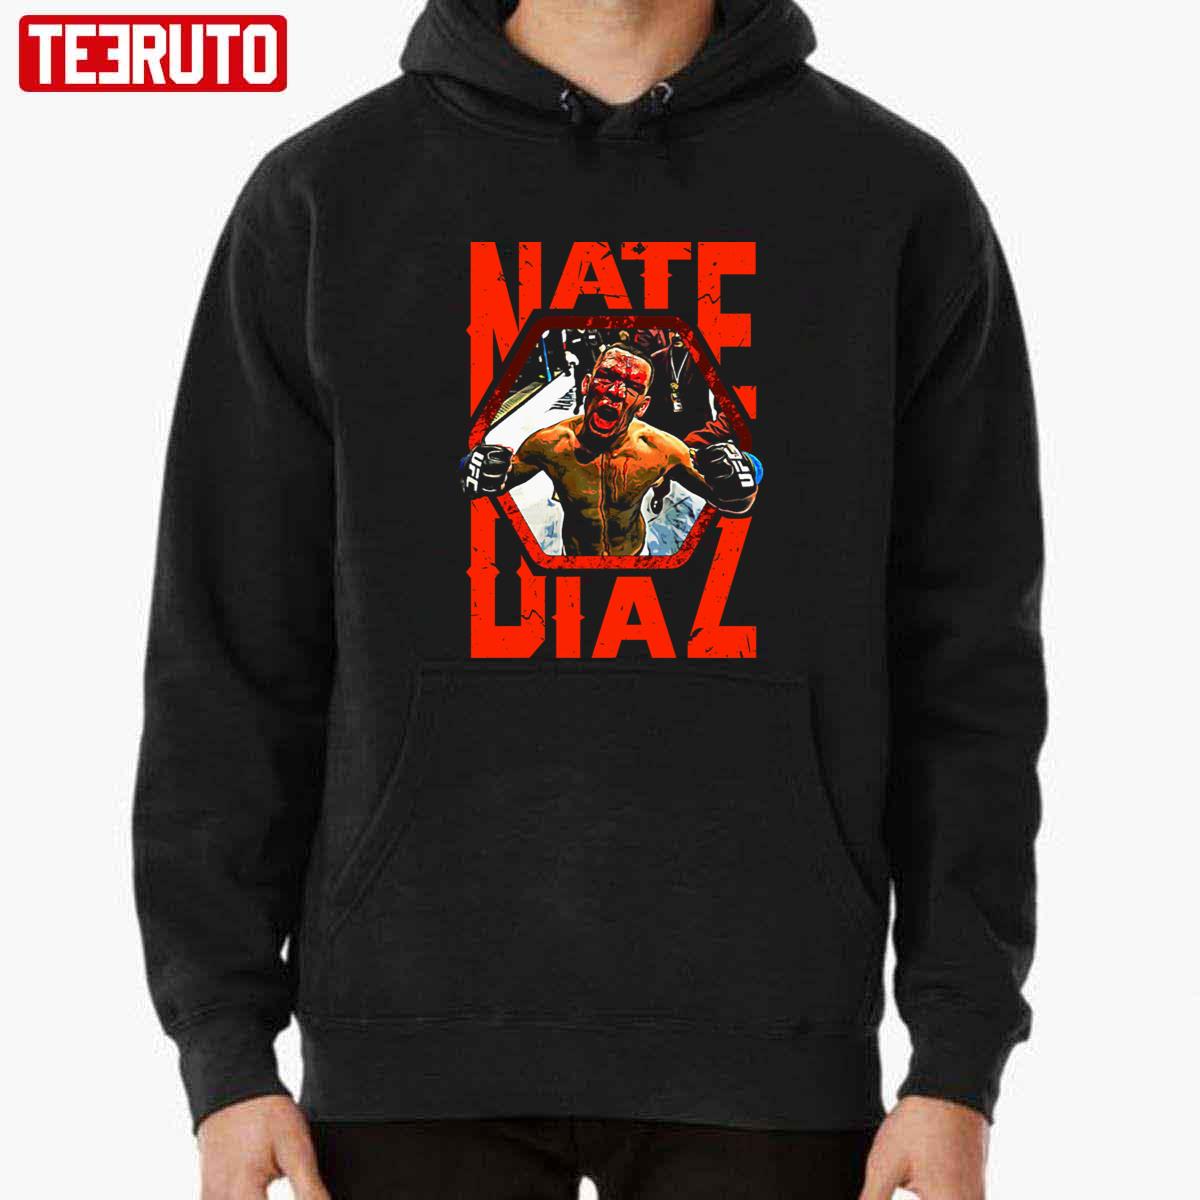 Bloody Art Nate Diaz Unisex T-shirt